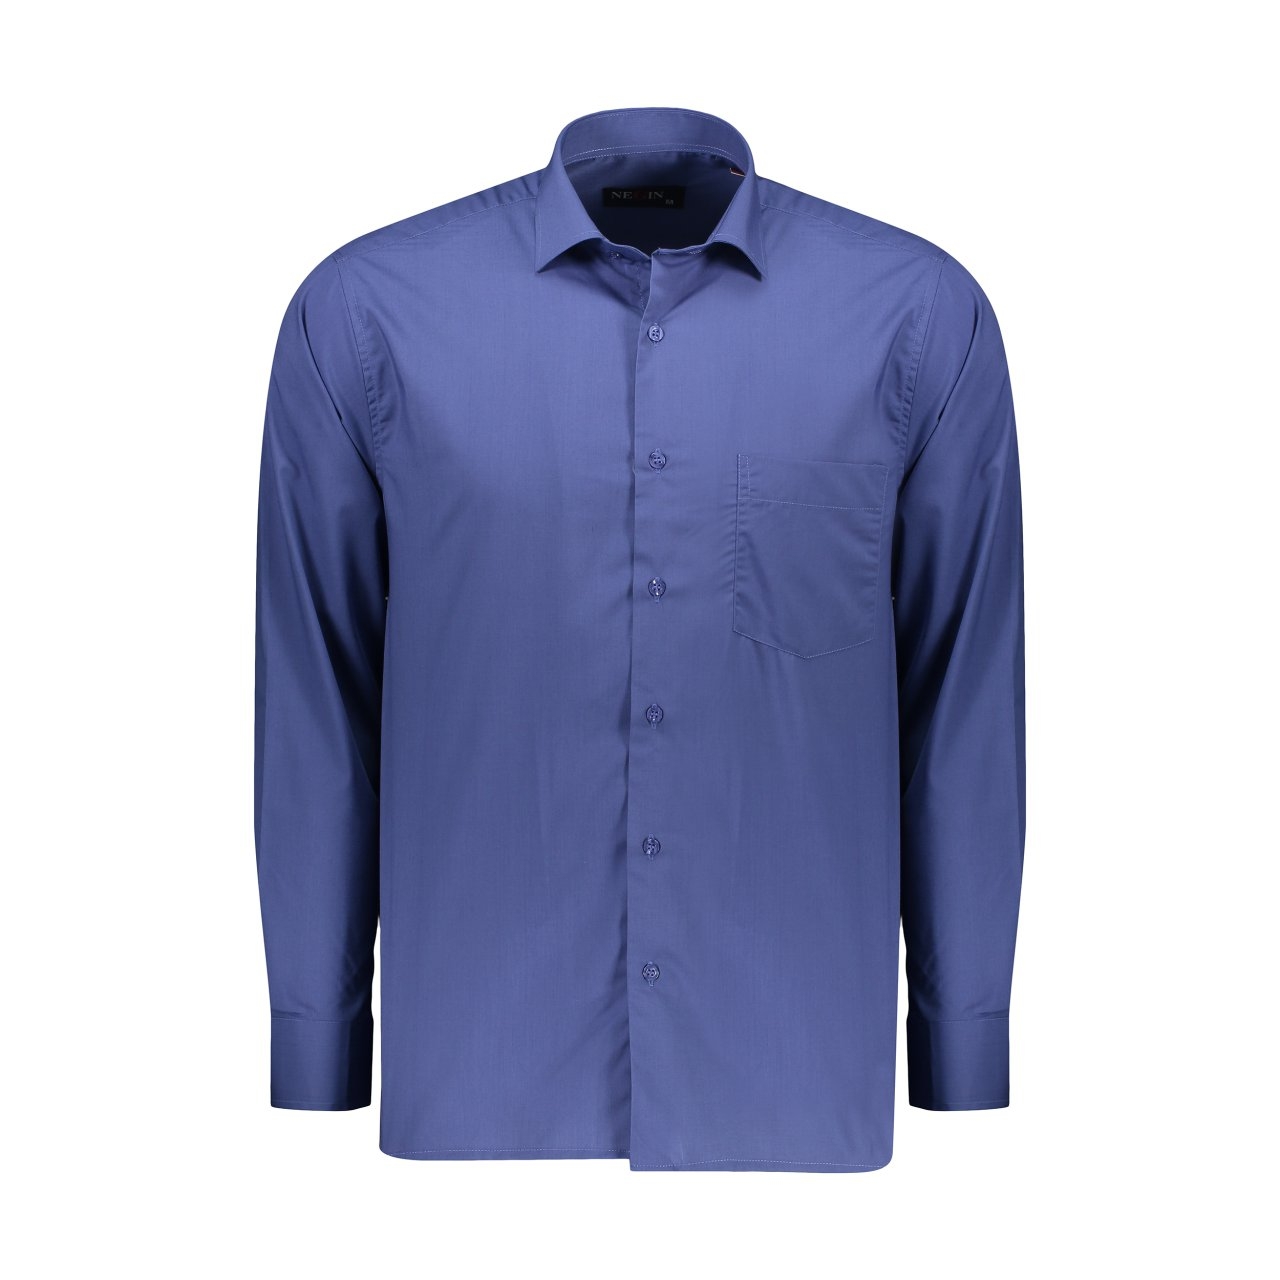 پیراهن مردانه نگین مدل YA-AS کد 4310 رنگ آبی